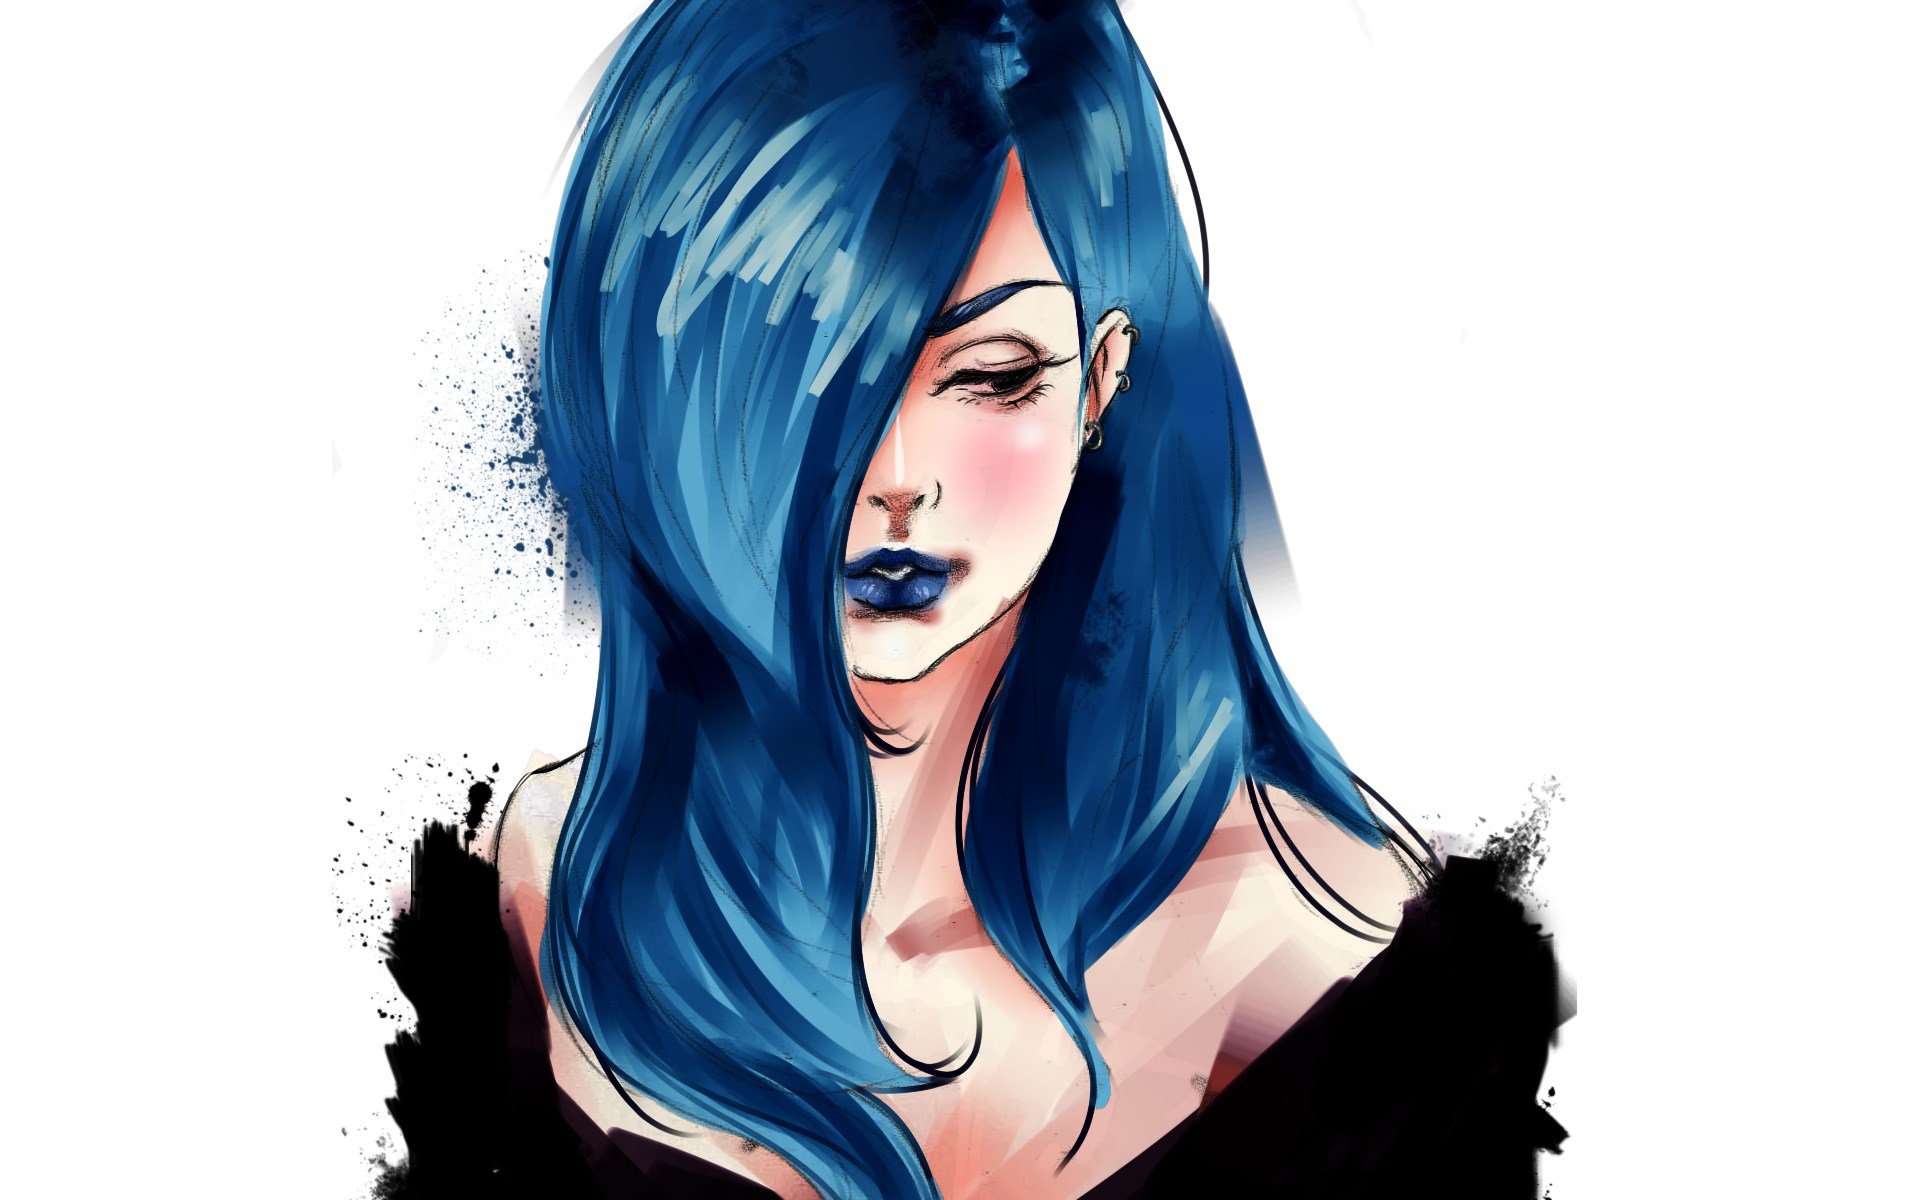 Cartoon Girl with Blue Hair - wide 6